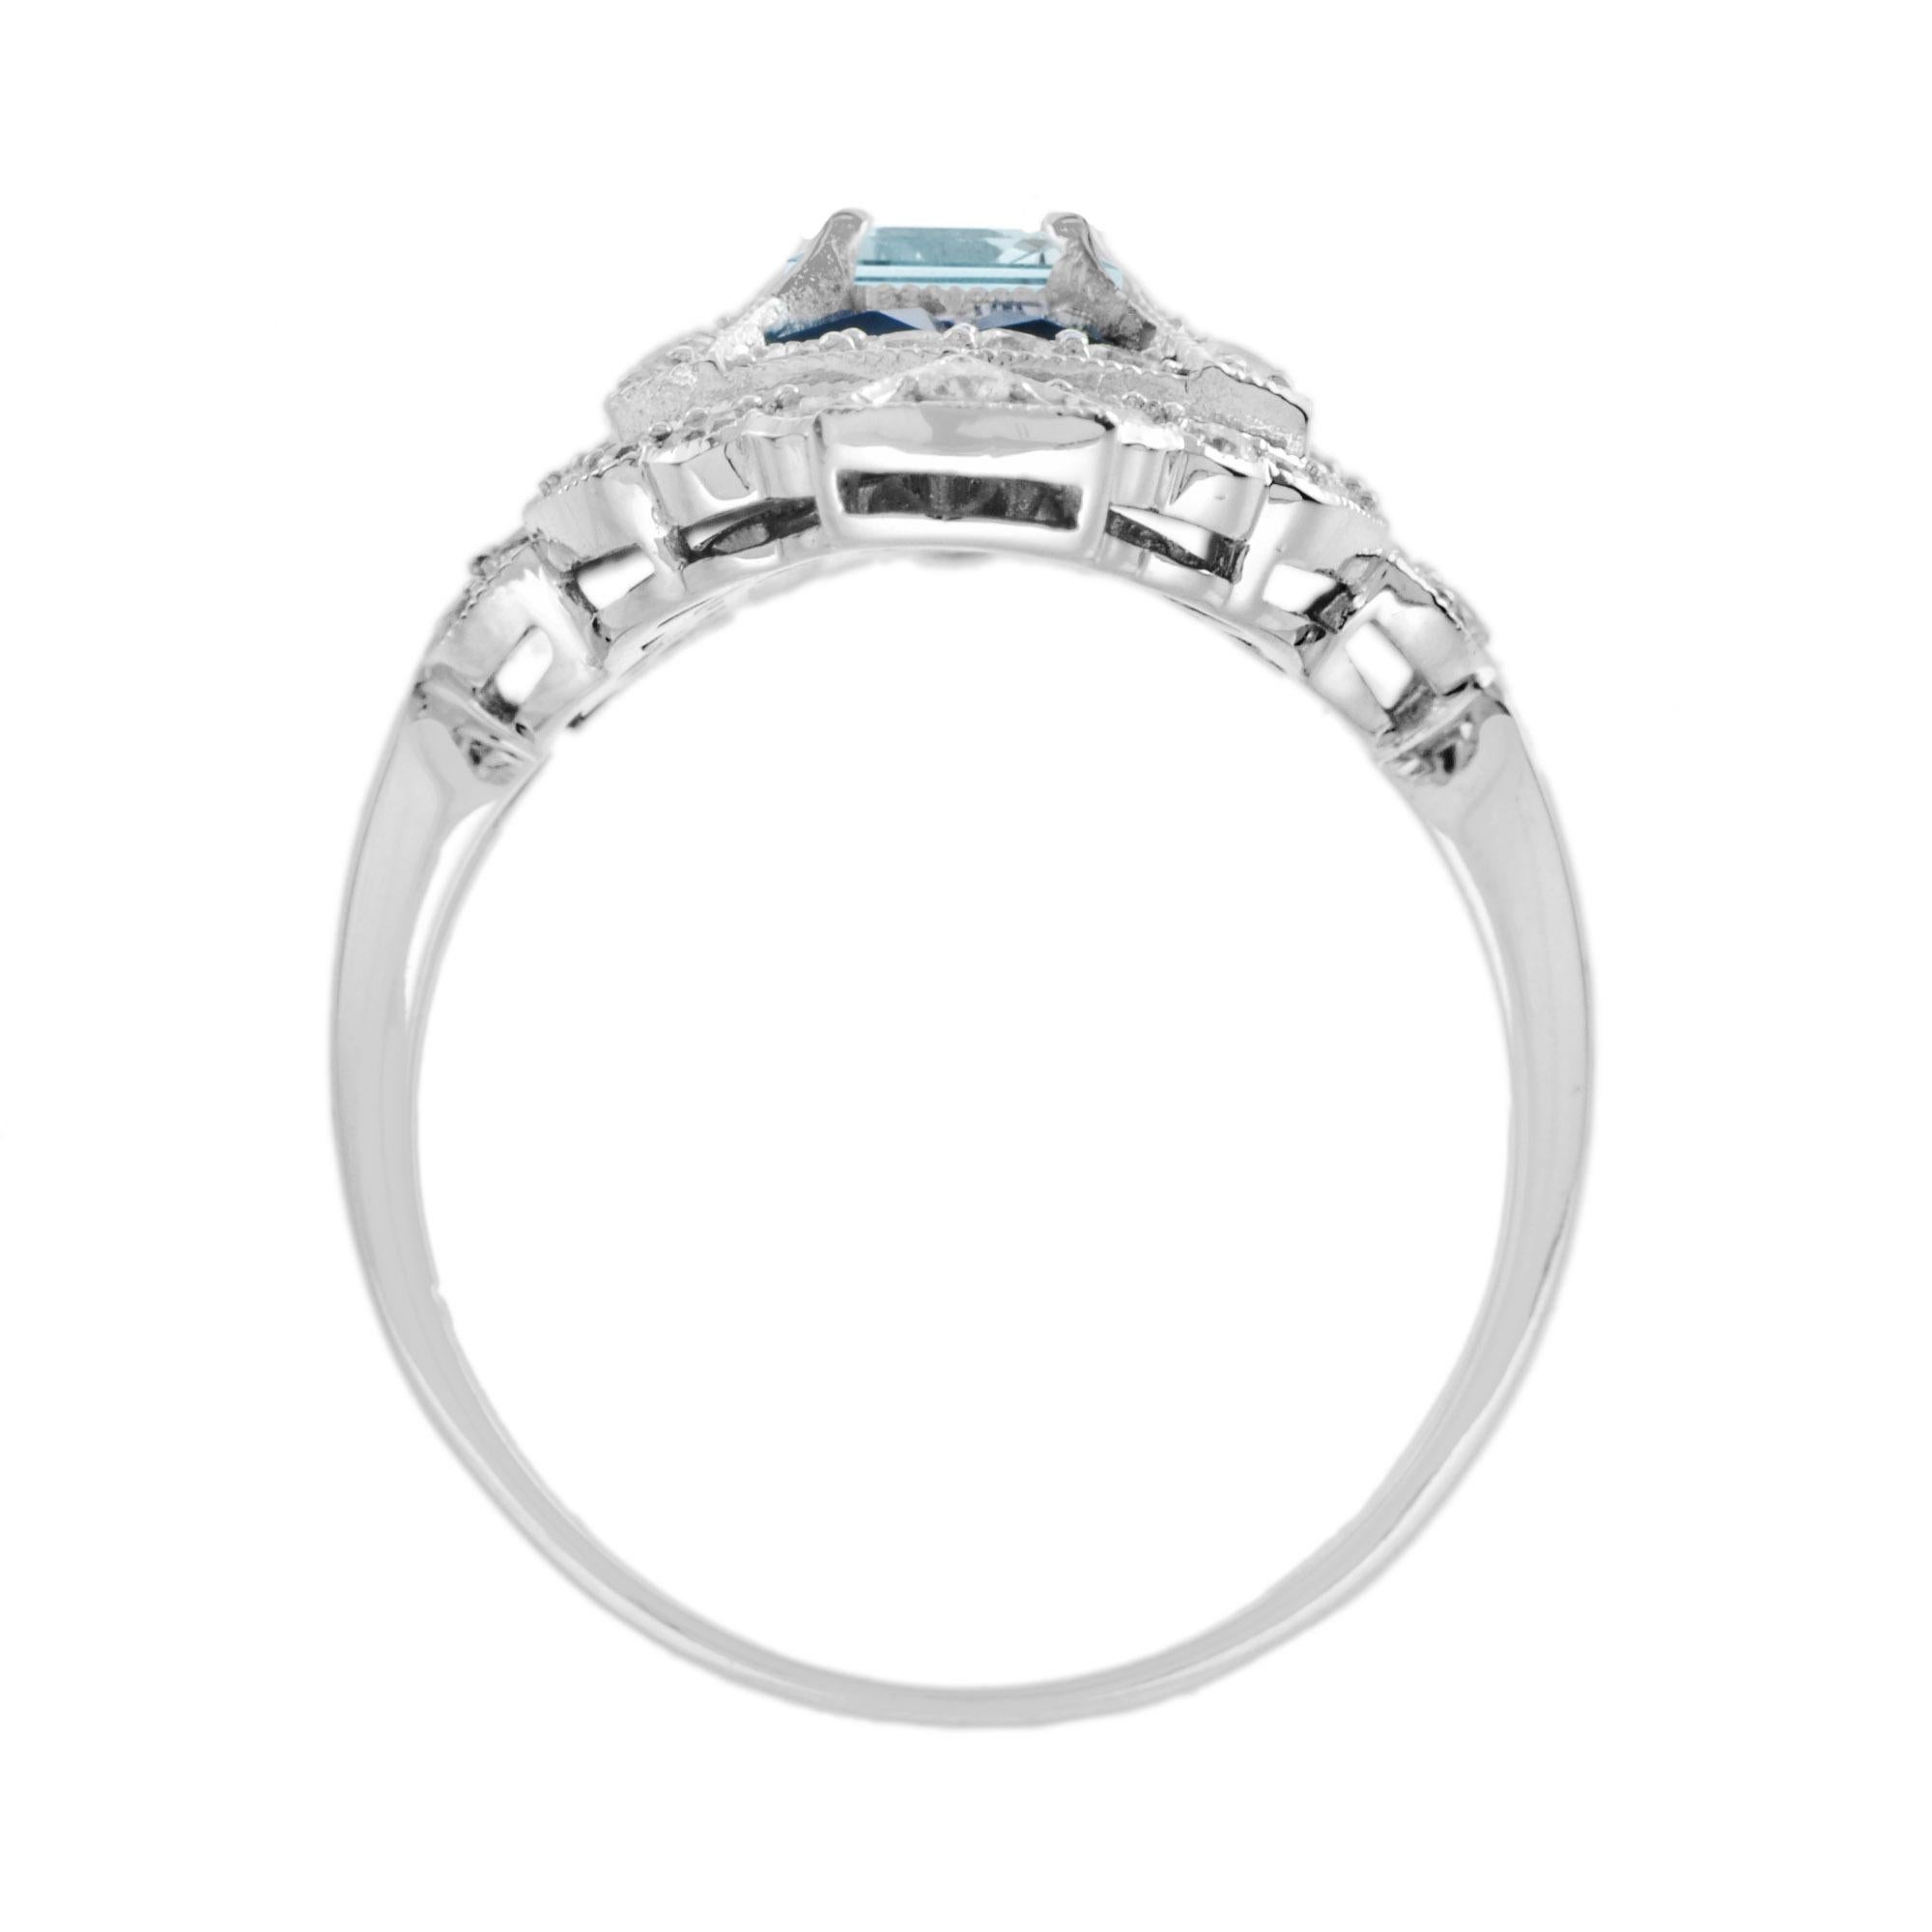 For Sale:  Aquamarine Blue Sapphire Diamond Art Deco Style Dinner Ring in 18K White Gold 6